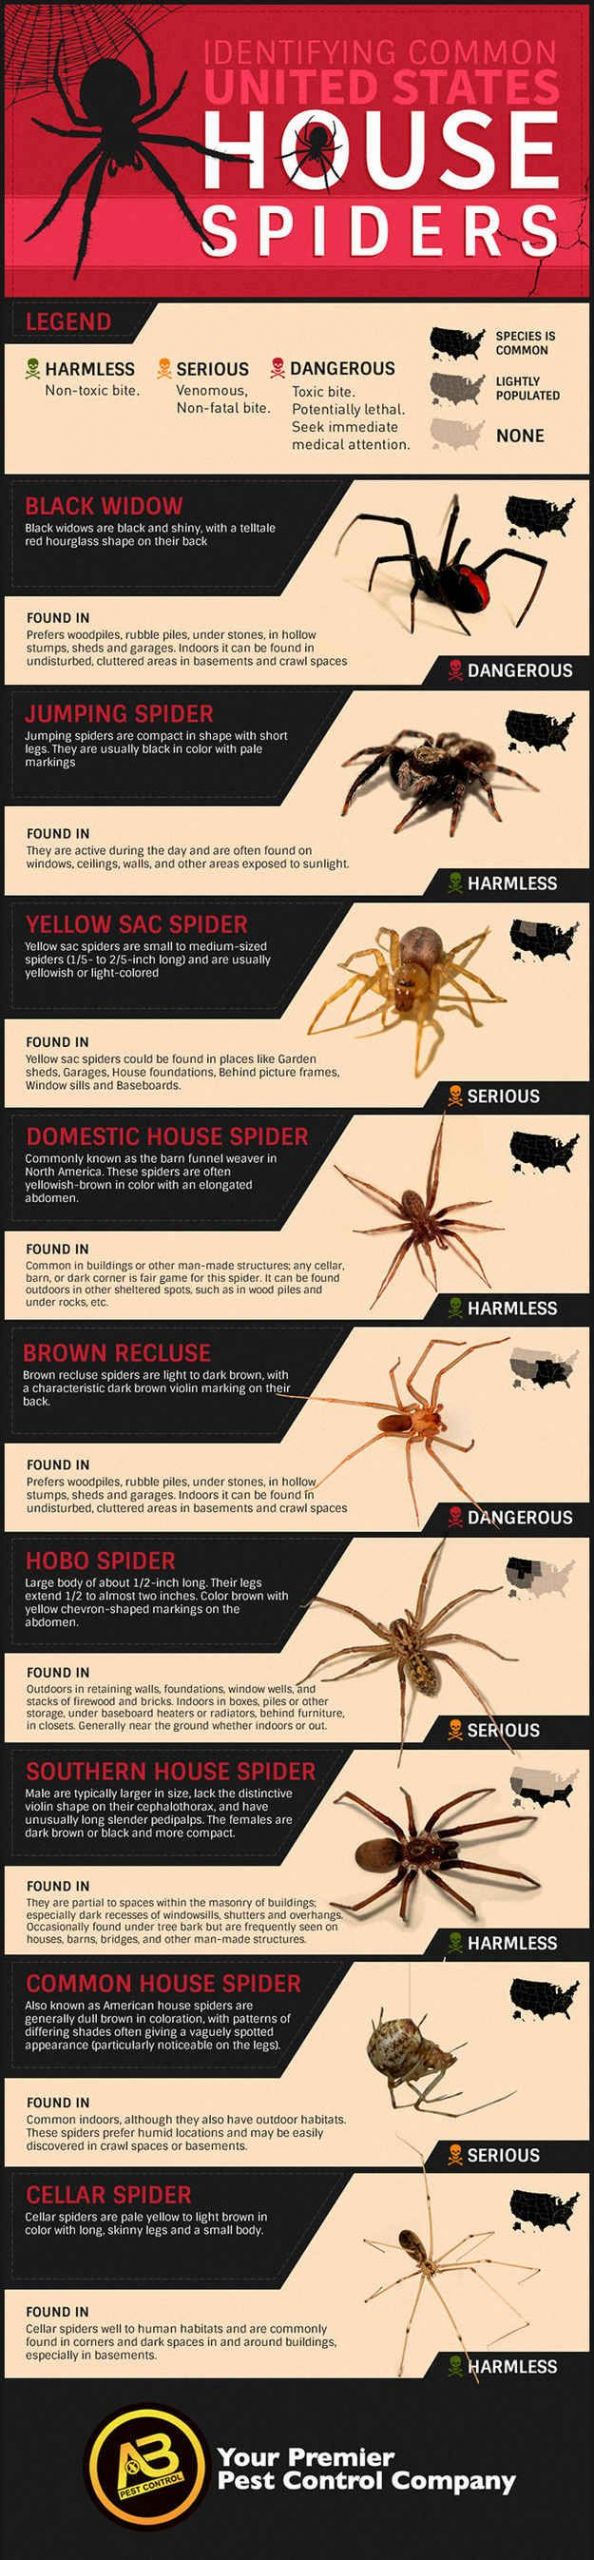 Punaises De Jardin Génial How to Identify Mon Poisonous Spiders In Your Home